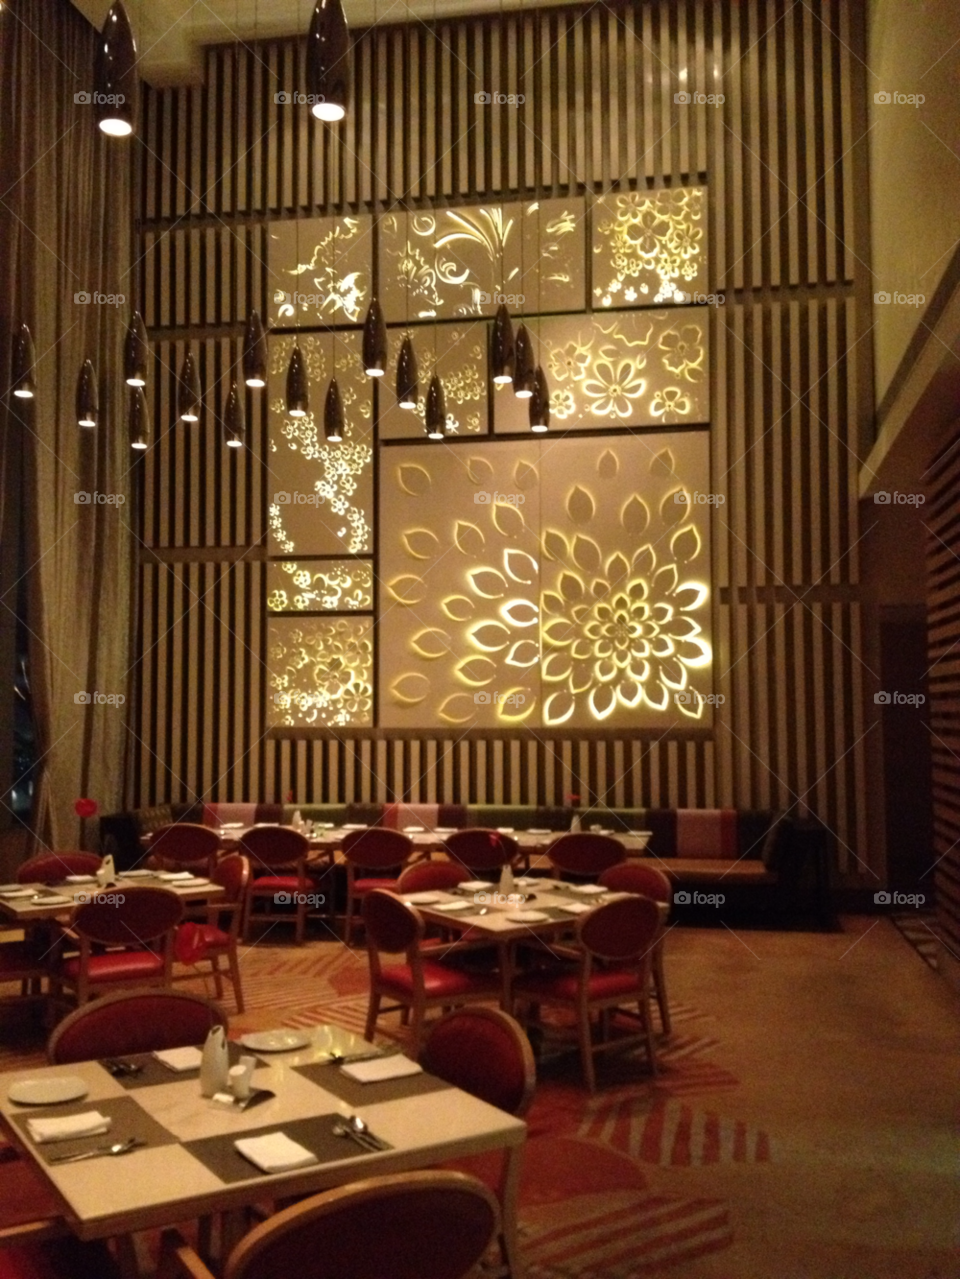 restaurant hotel india sheraton by Nietje70